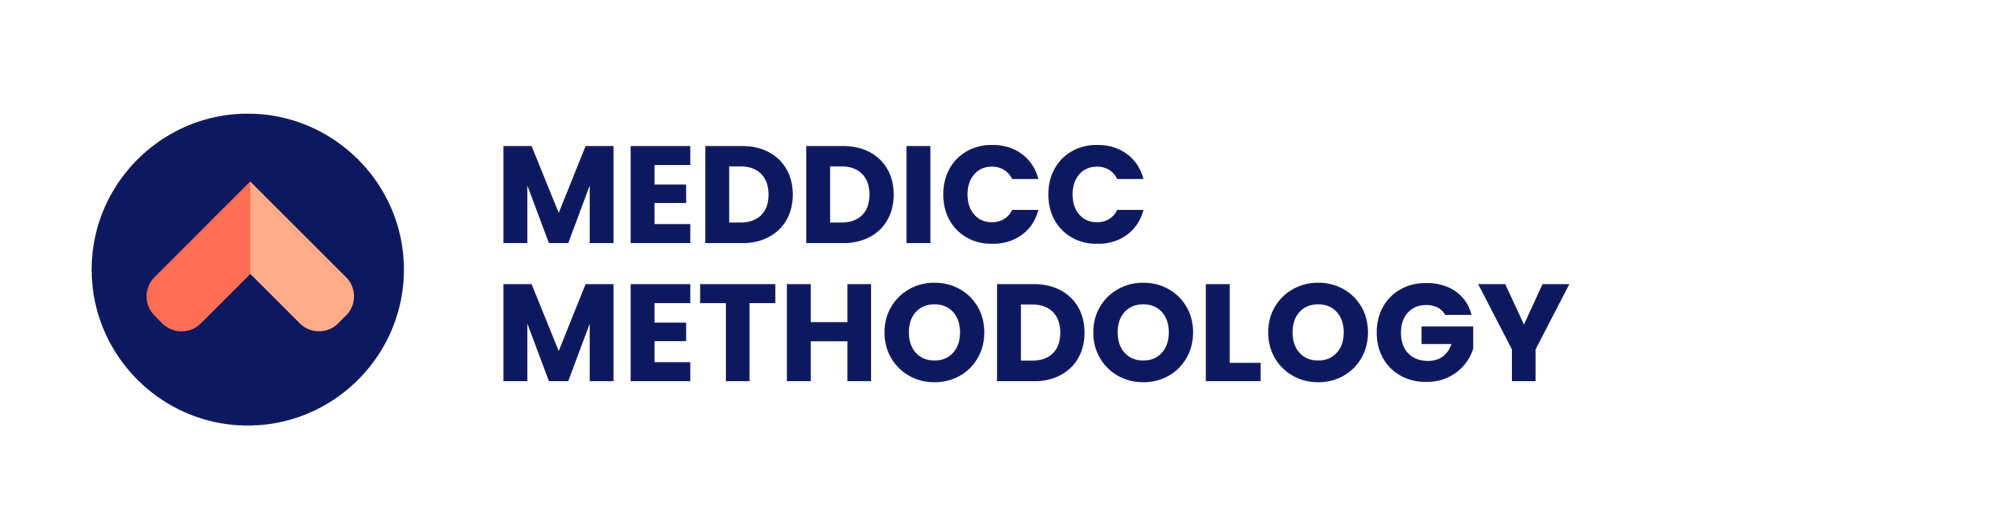 MEDDICC-METHODOLOGY-SUB1-COLOUR